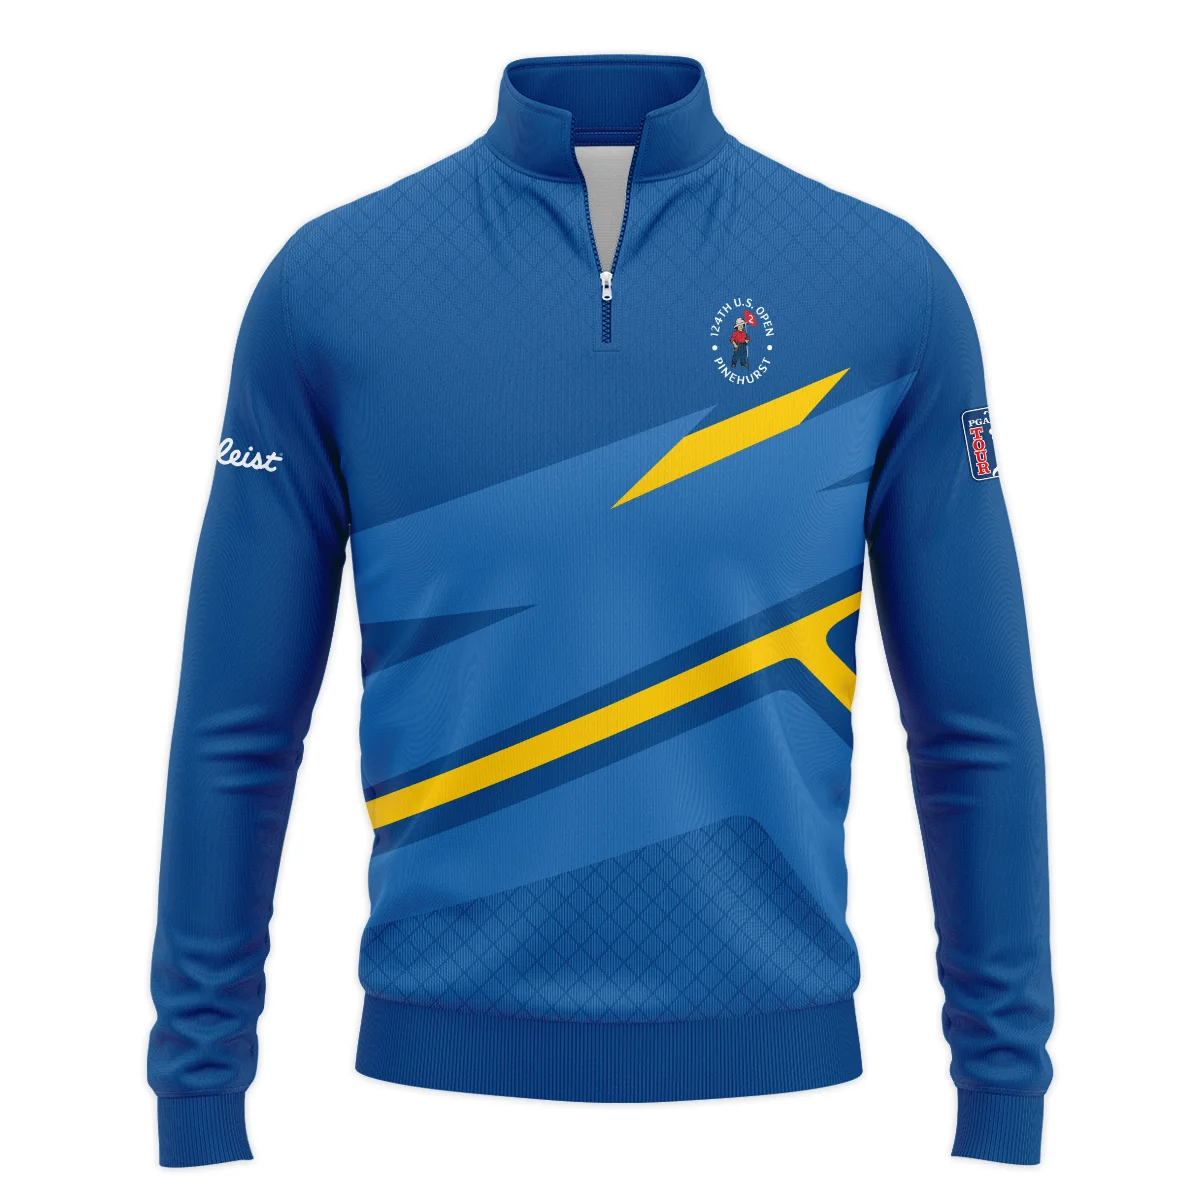 Titleist 124th U.S. Open Pinehurst Blue Yellow Mix Pattern Sleeveless Jacket Style Classic